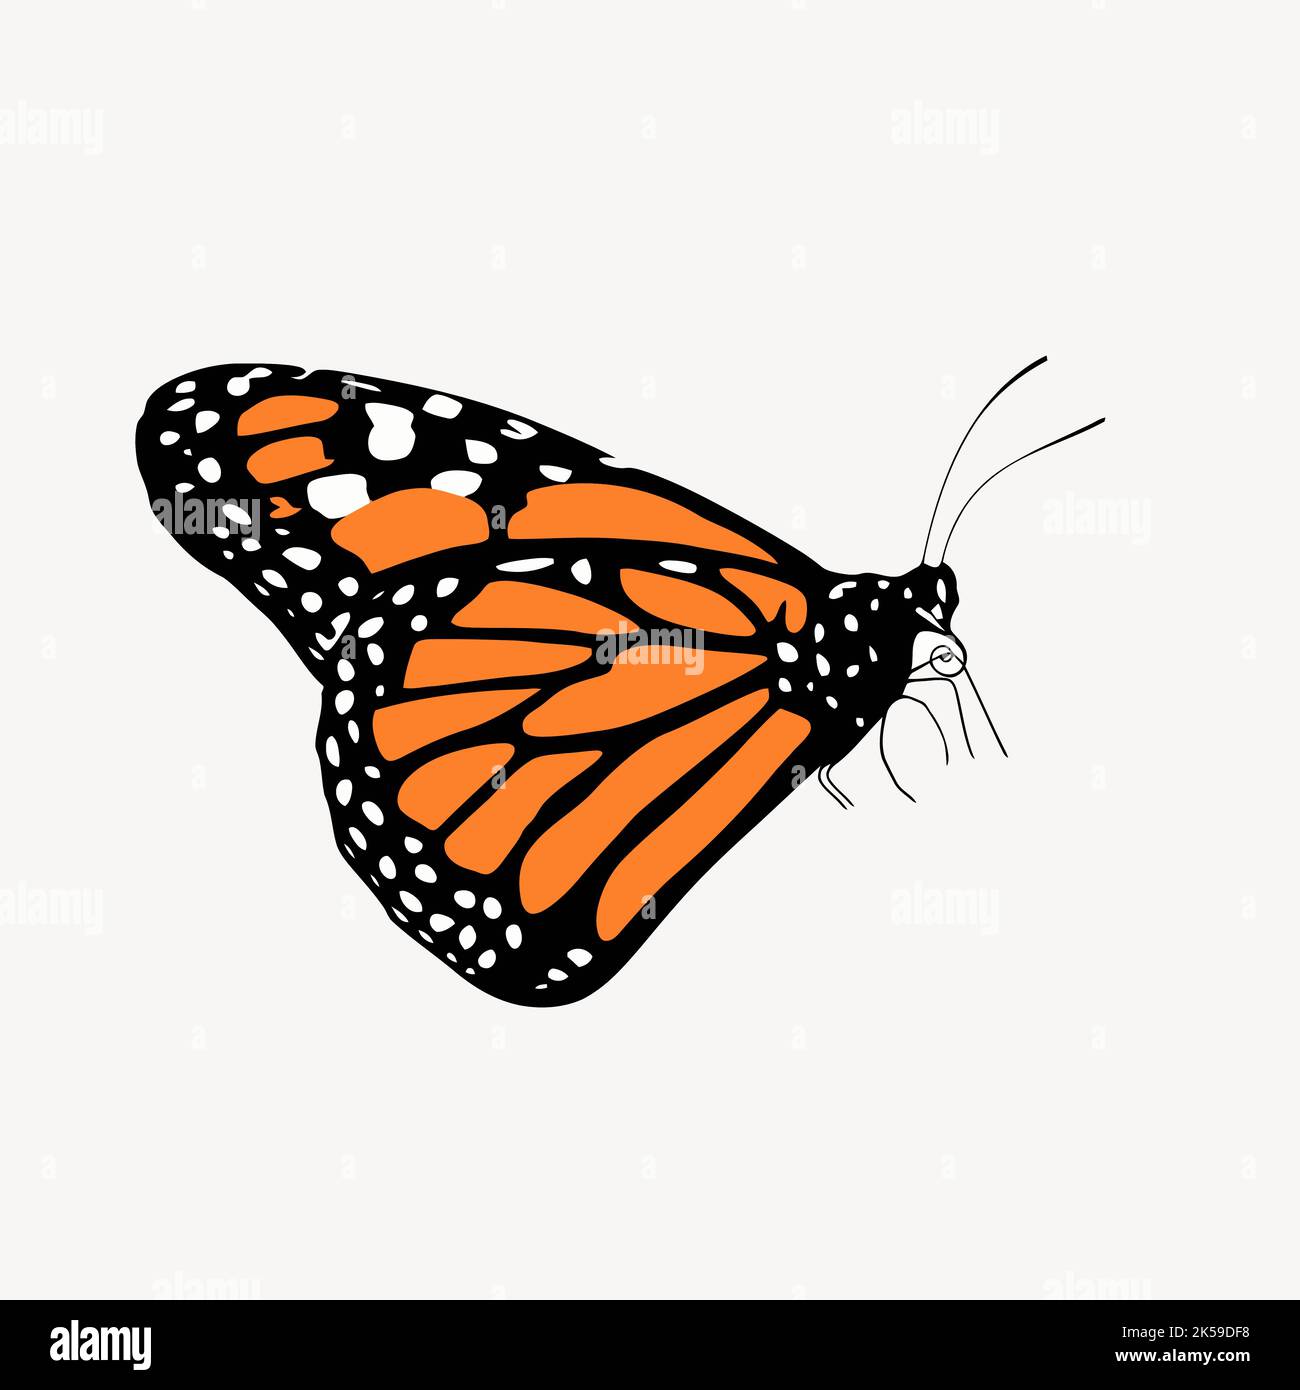 Drawing butterflies. Stencil butterfly, moth wings and flyin